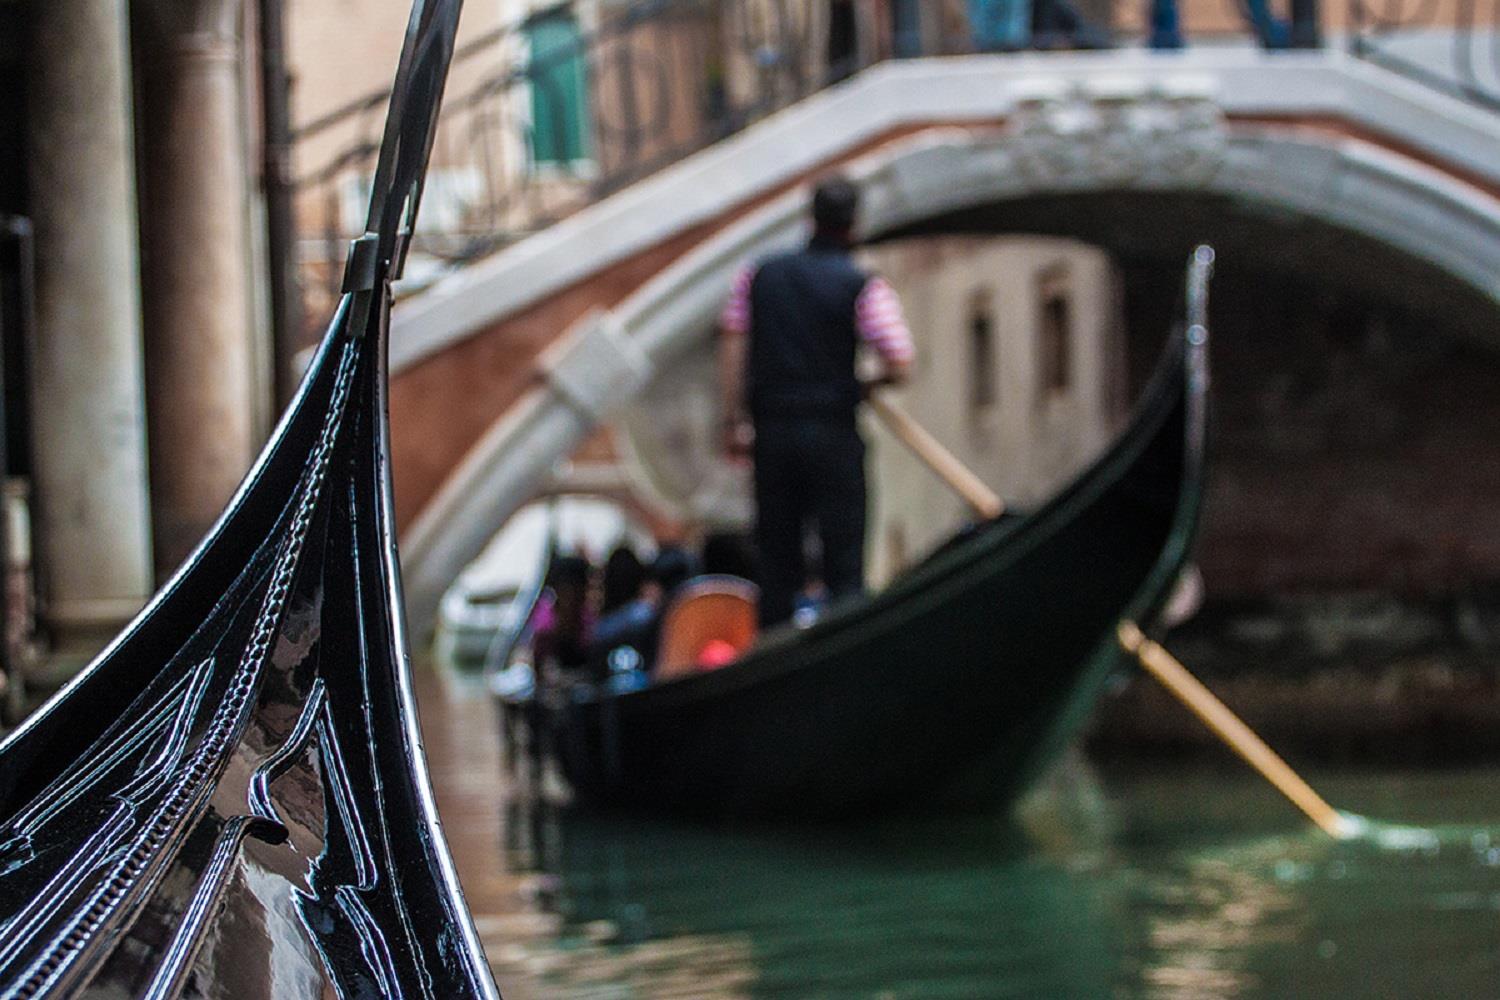 Gondola-ride-through-the-canals-3